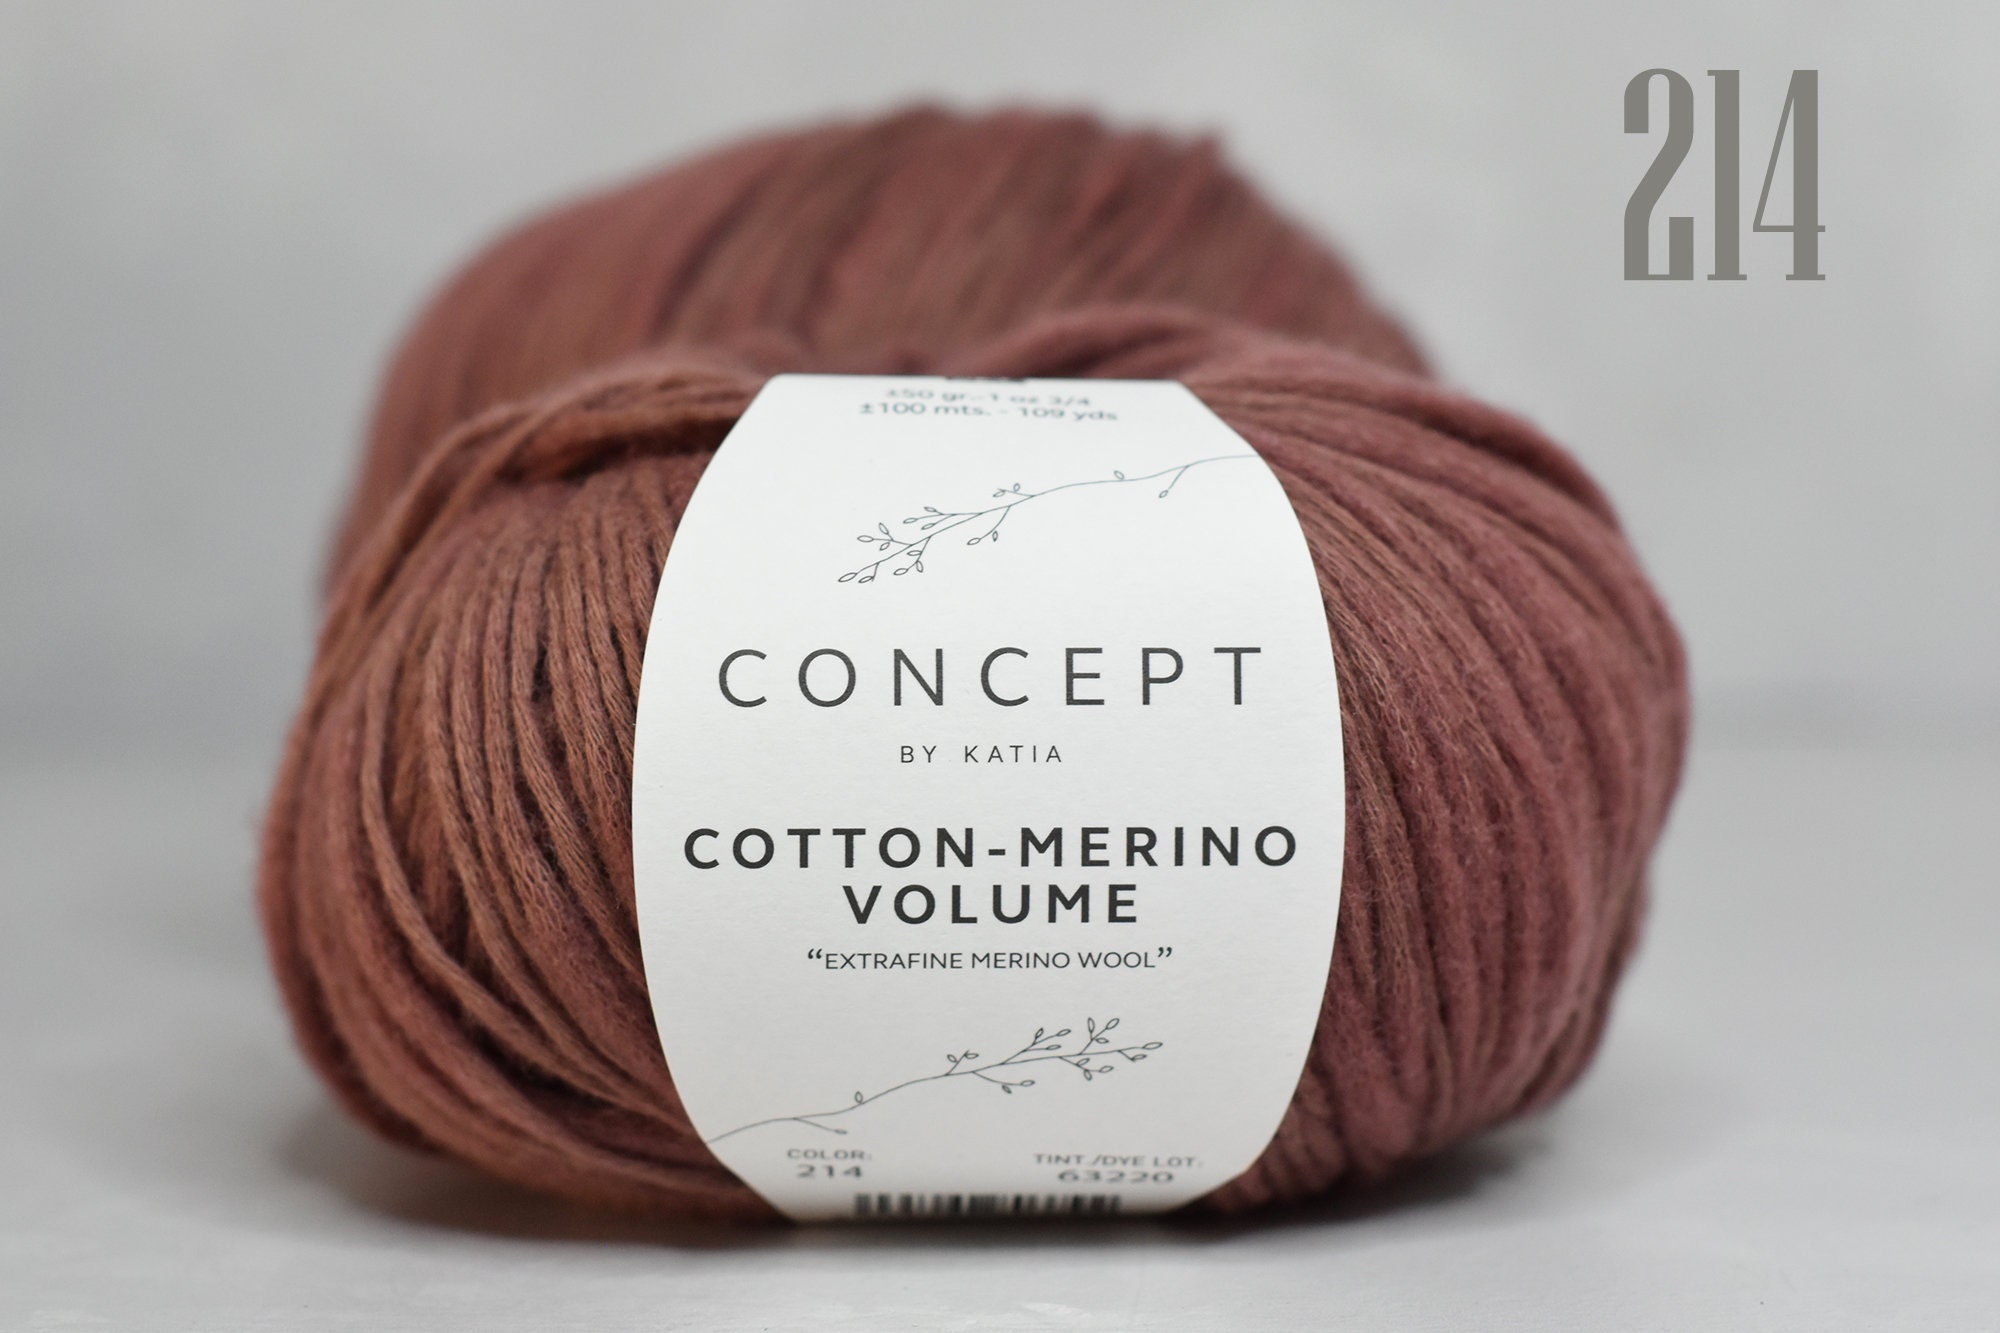 Katia Concept - Cotton Merino Volume - Thick and Thin Yarn